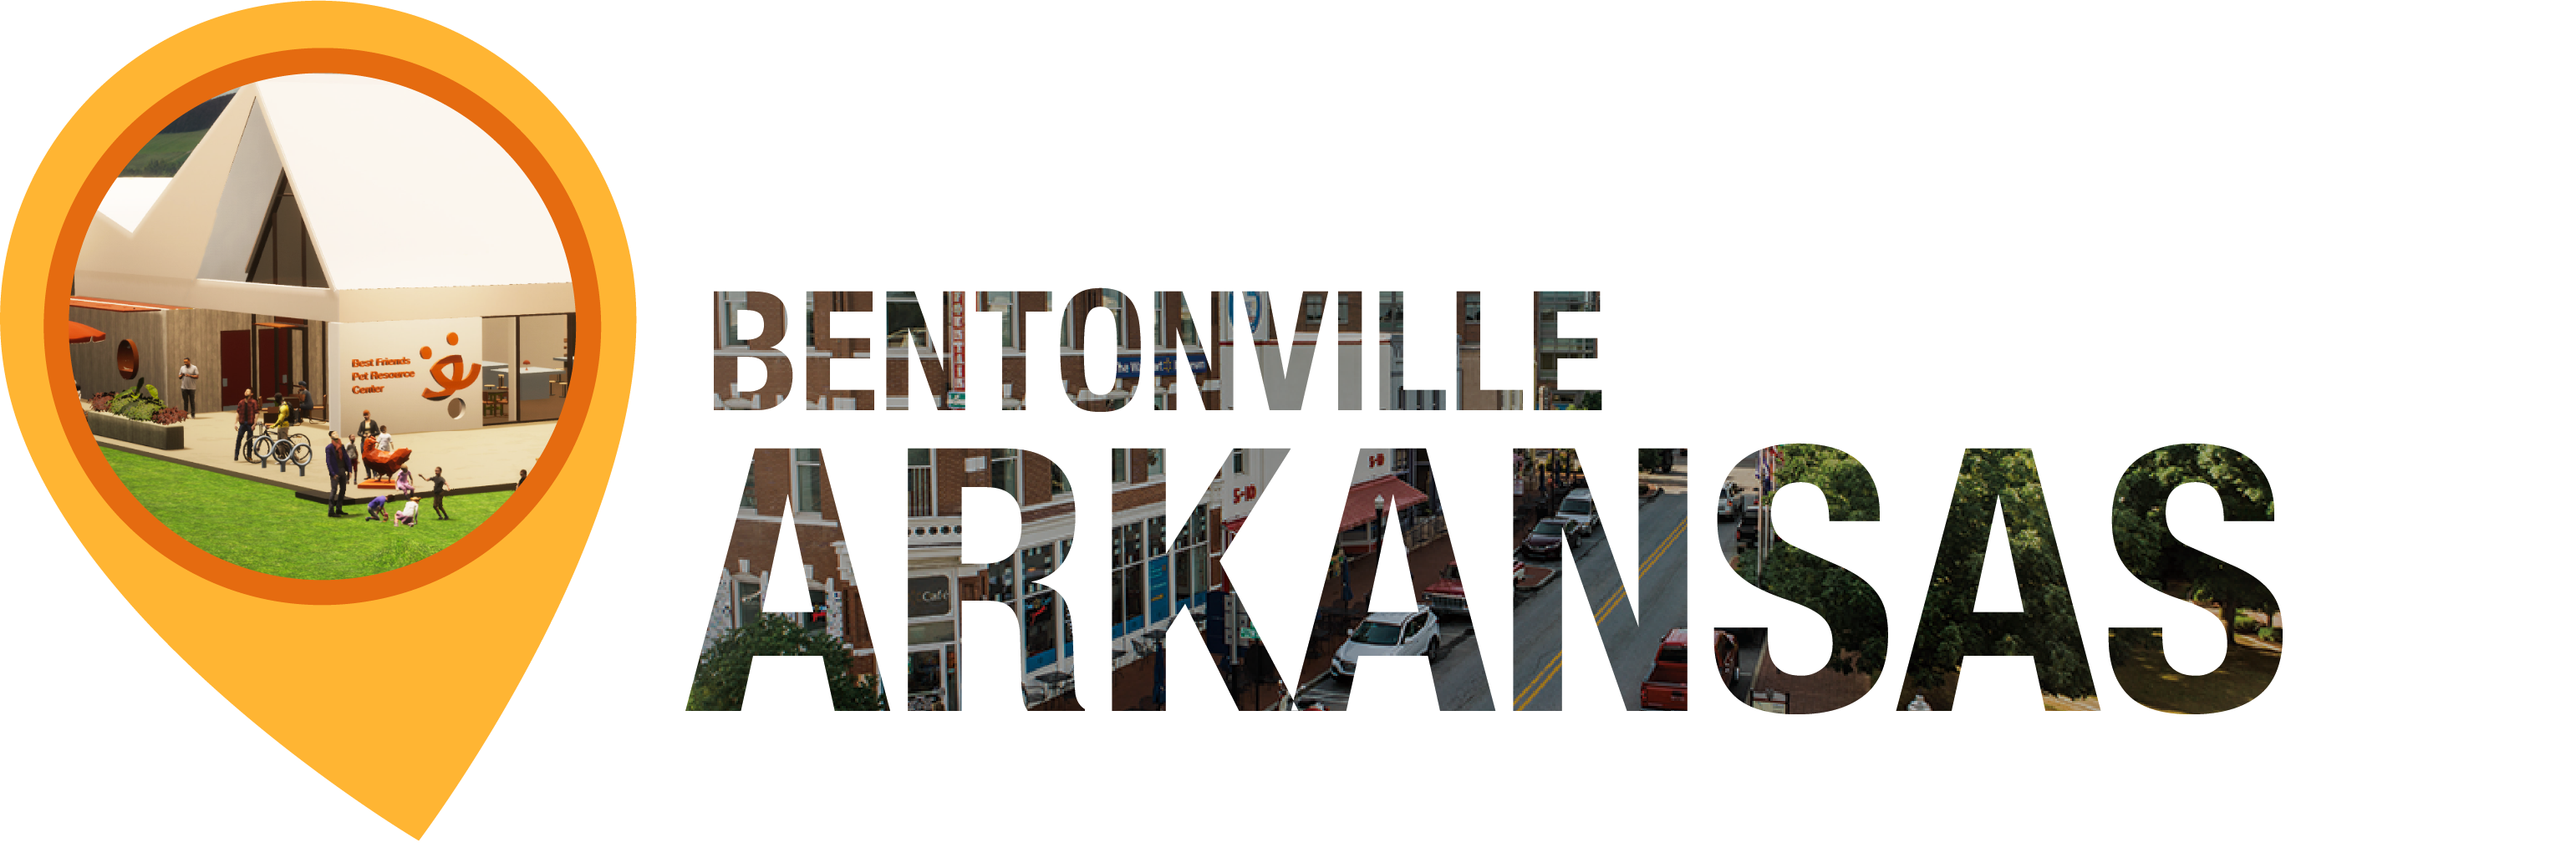 Bentonville Arkansas icon graphic